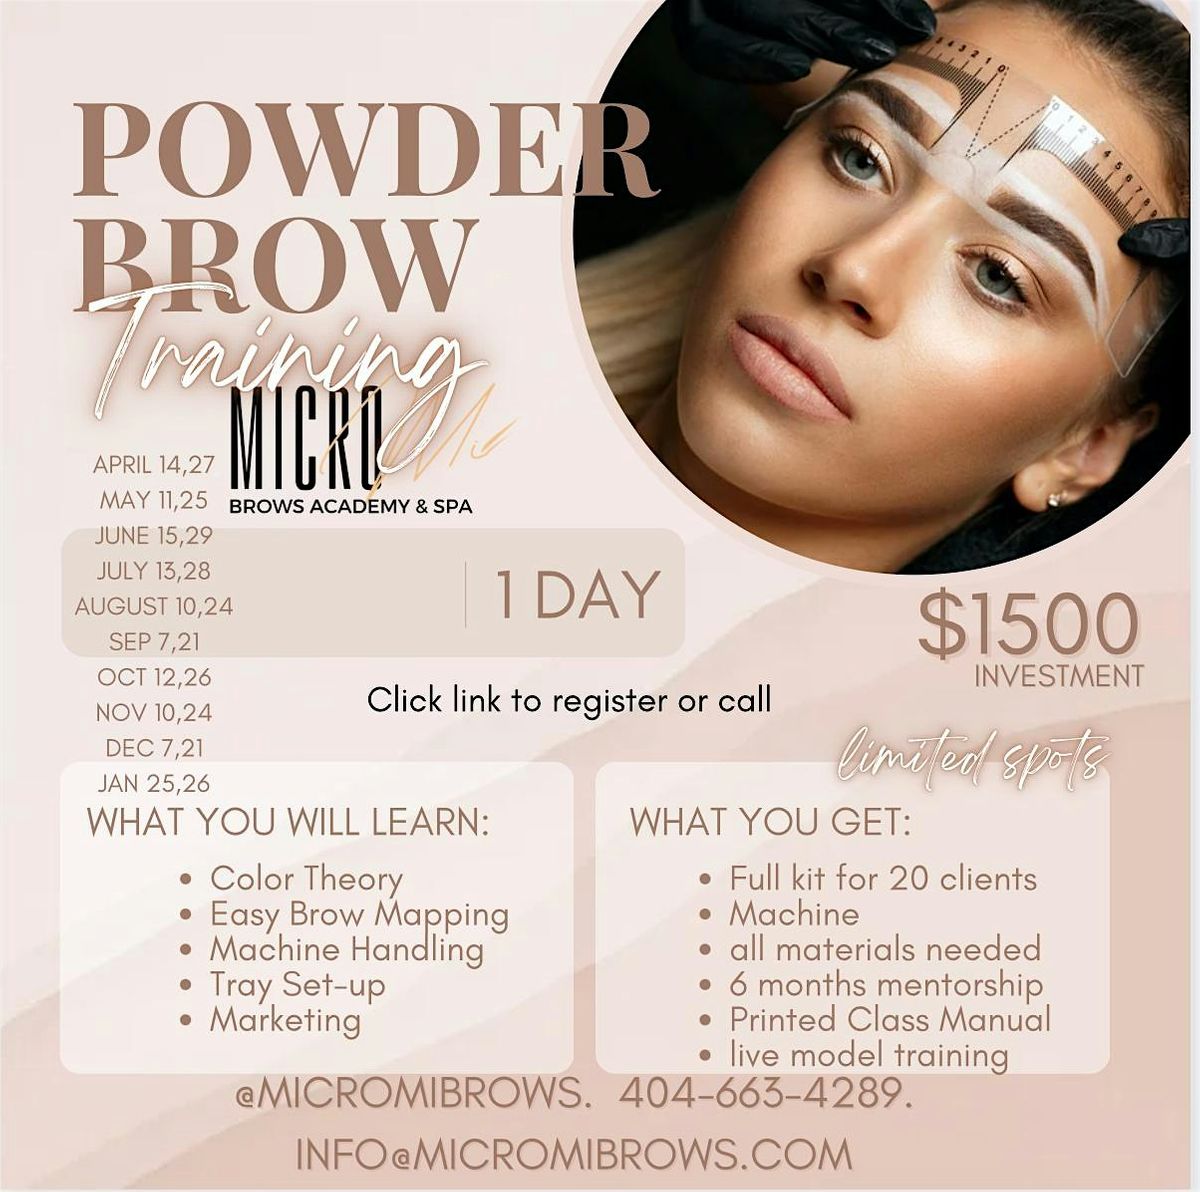 Powder brow training